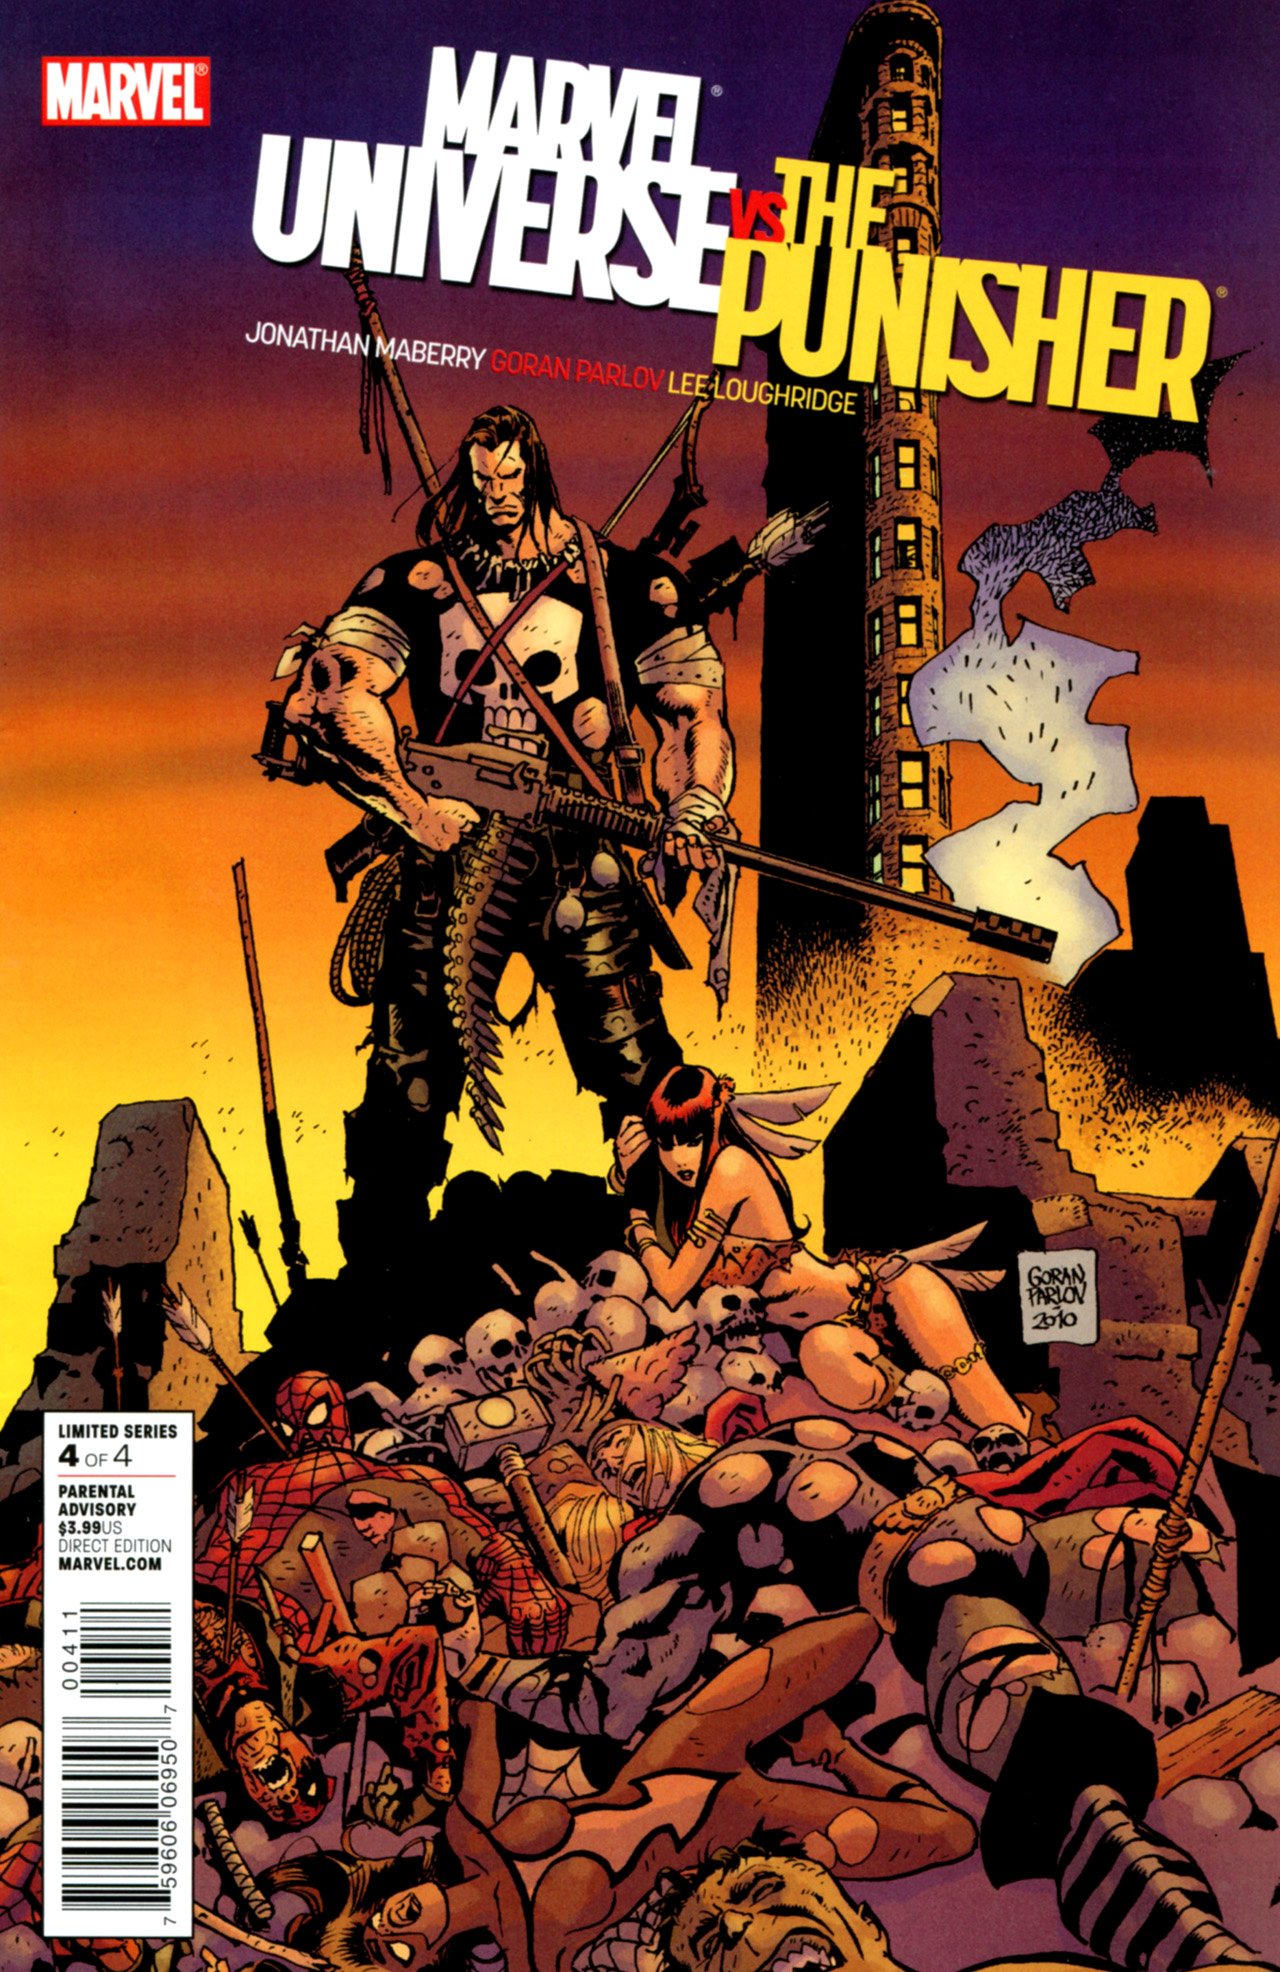 Marvel Universe vs. The Punisher #4 - Part 4: Gods & Monsters